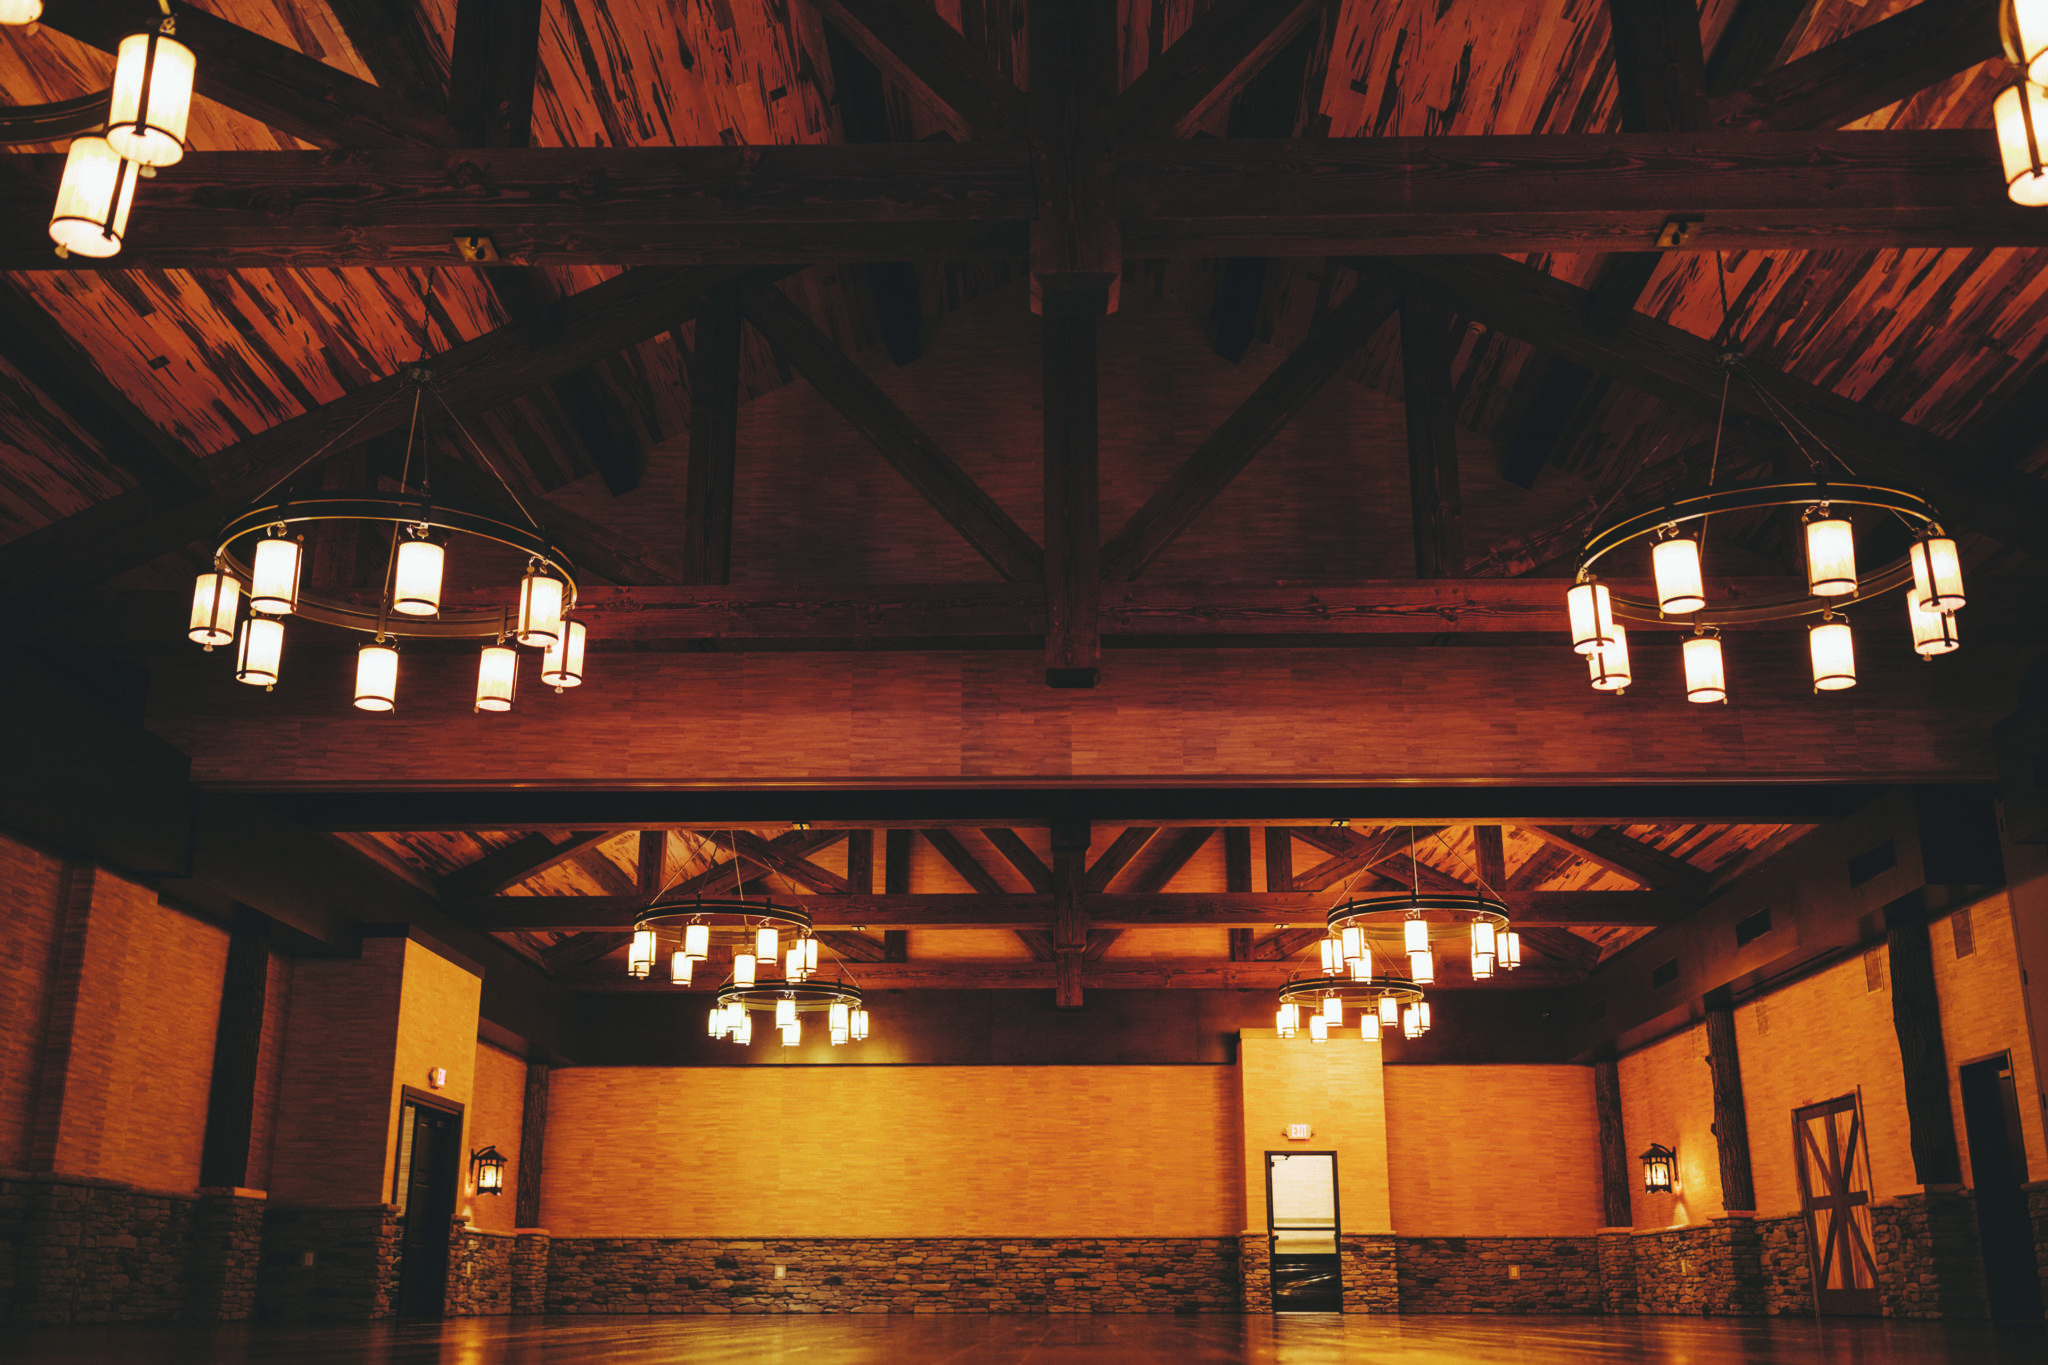 The Barn rustic ceiling beams